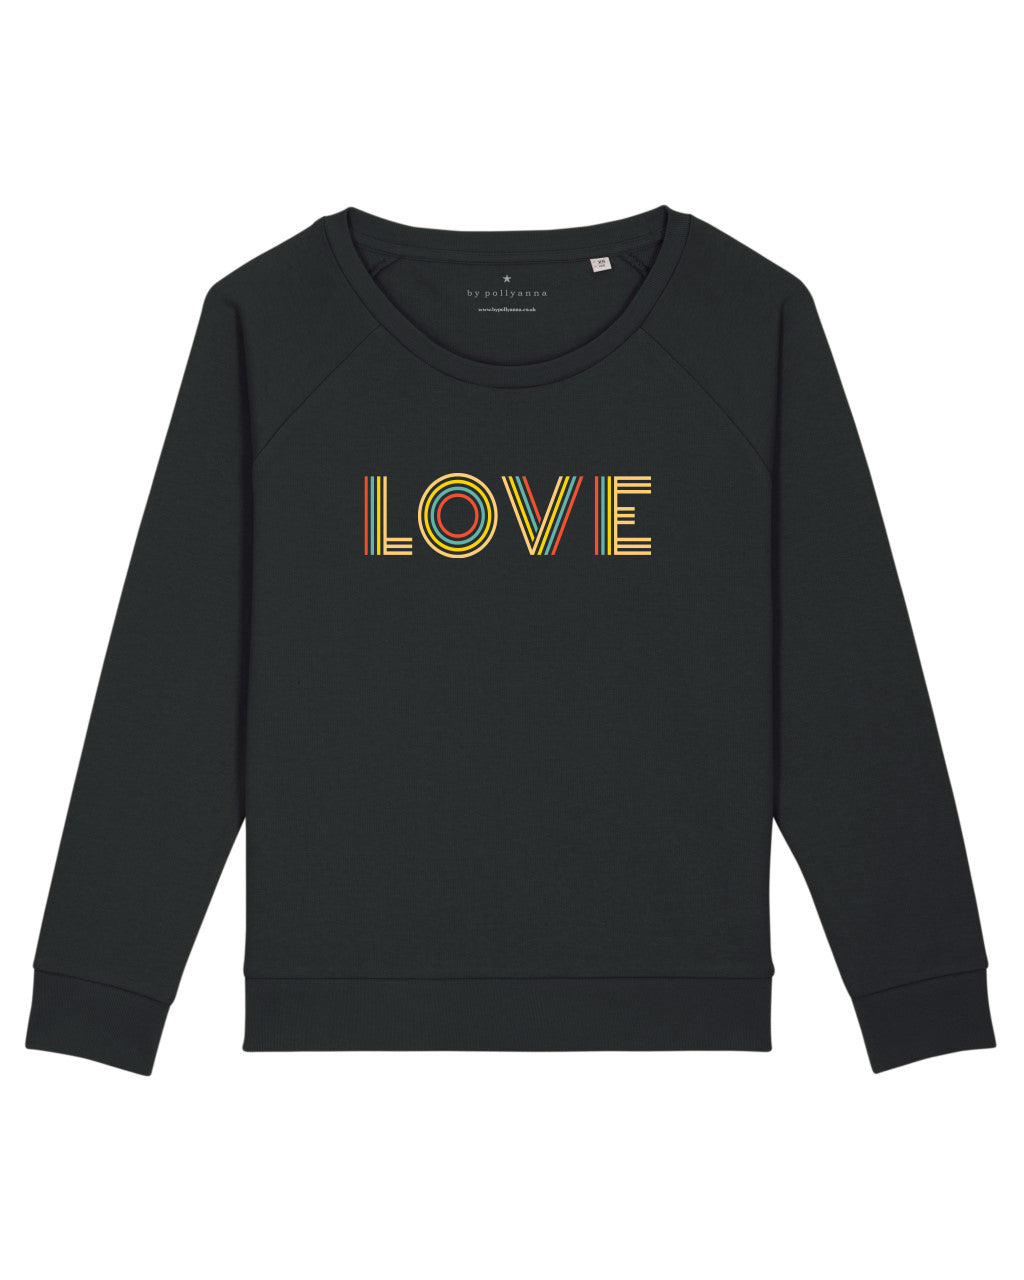 Retro LOVE Sweatshirt - RELAXED FIT